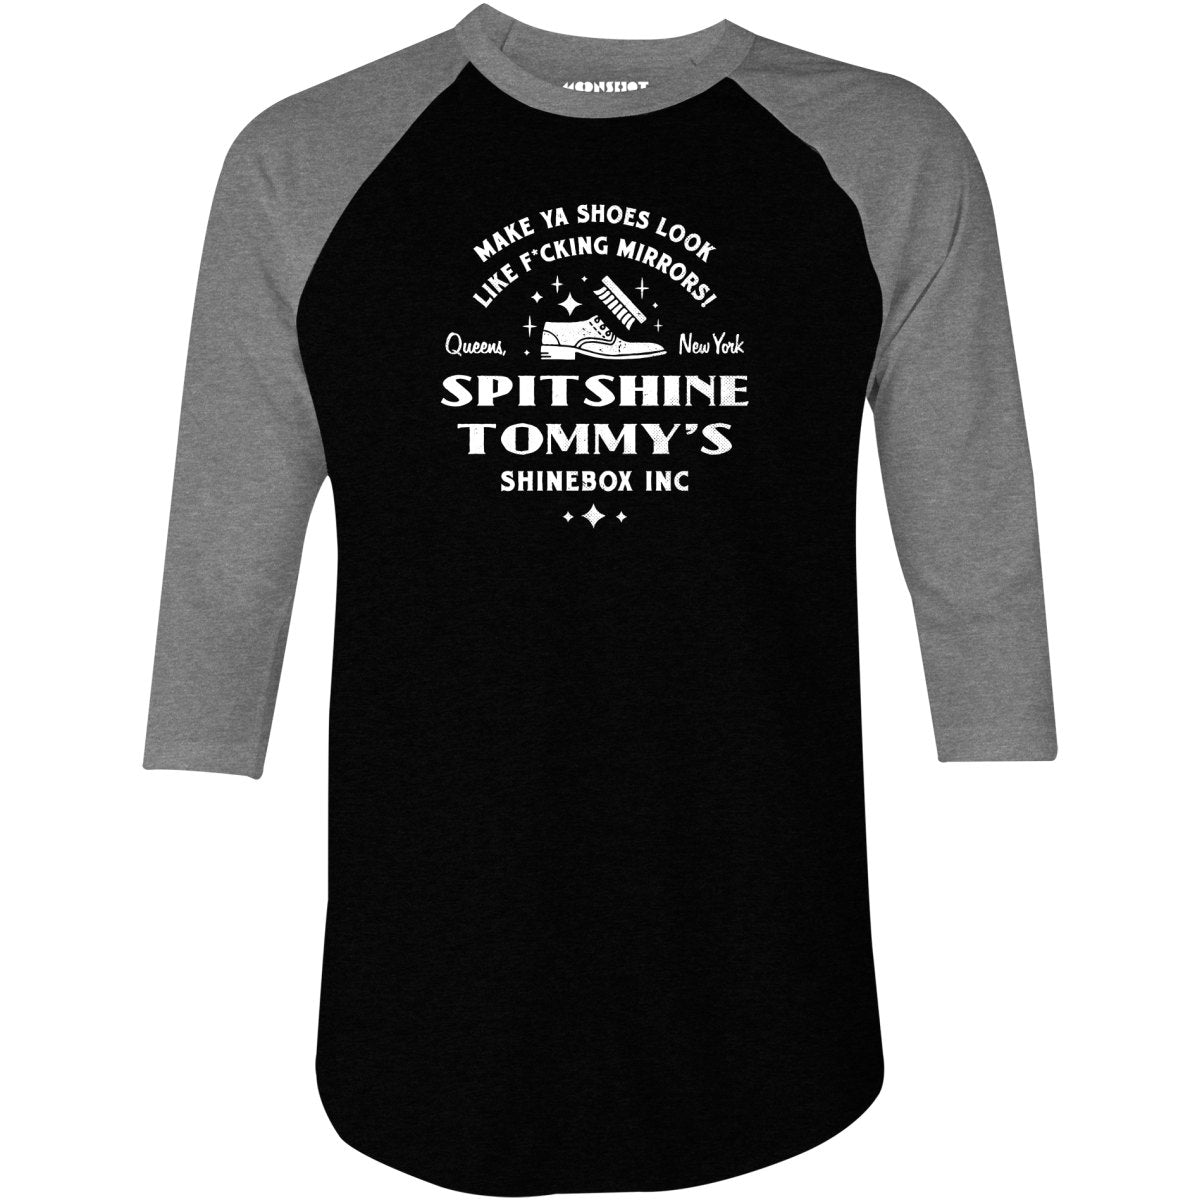 Spitshine Tommy's Shinebox Inc. - 3/4 Sleeve Raglan T-Shirt